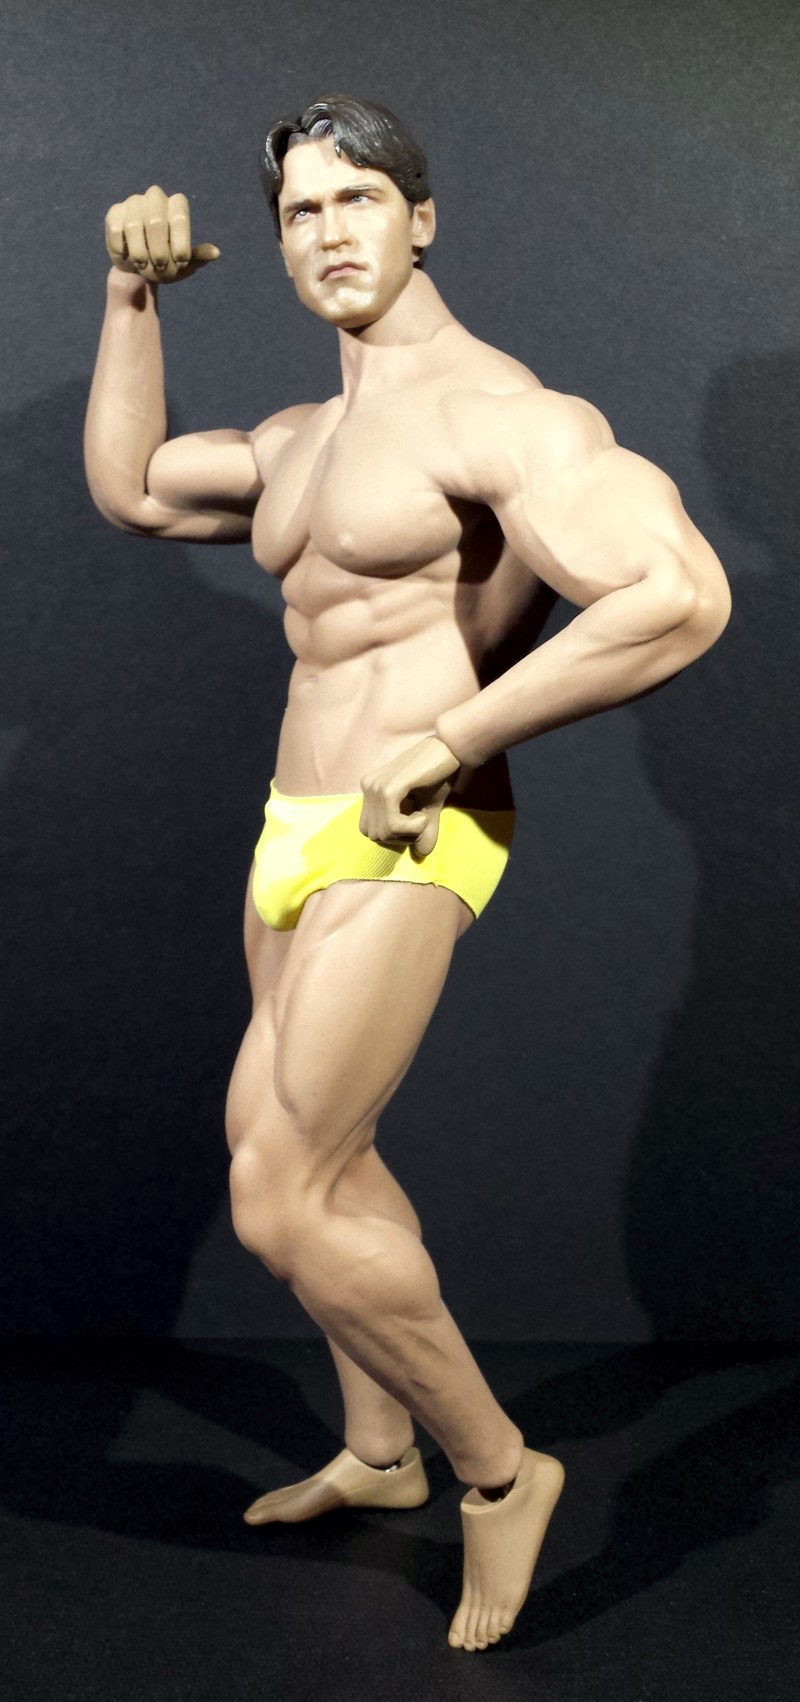 1/6 TBLeague Phicen M30 M31 M32 M33 M34 Seamless Male Muscular Body Steel  Figure